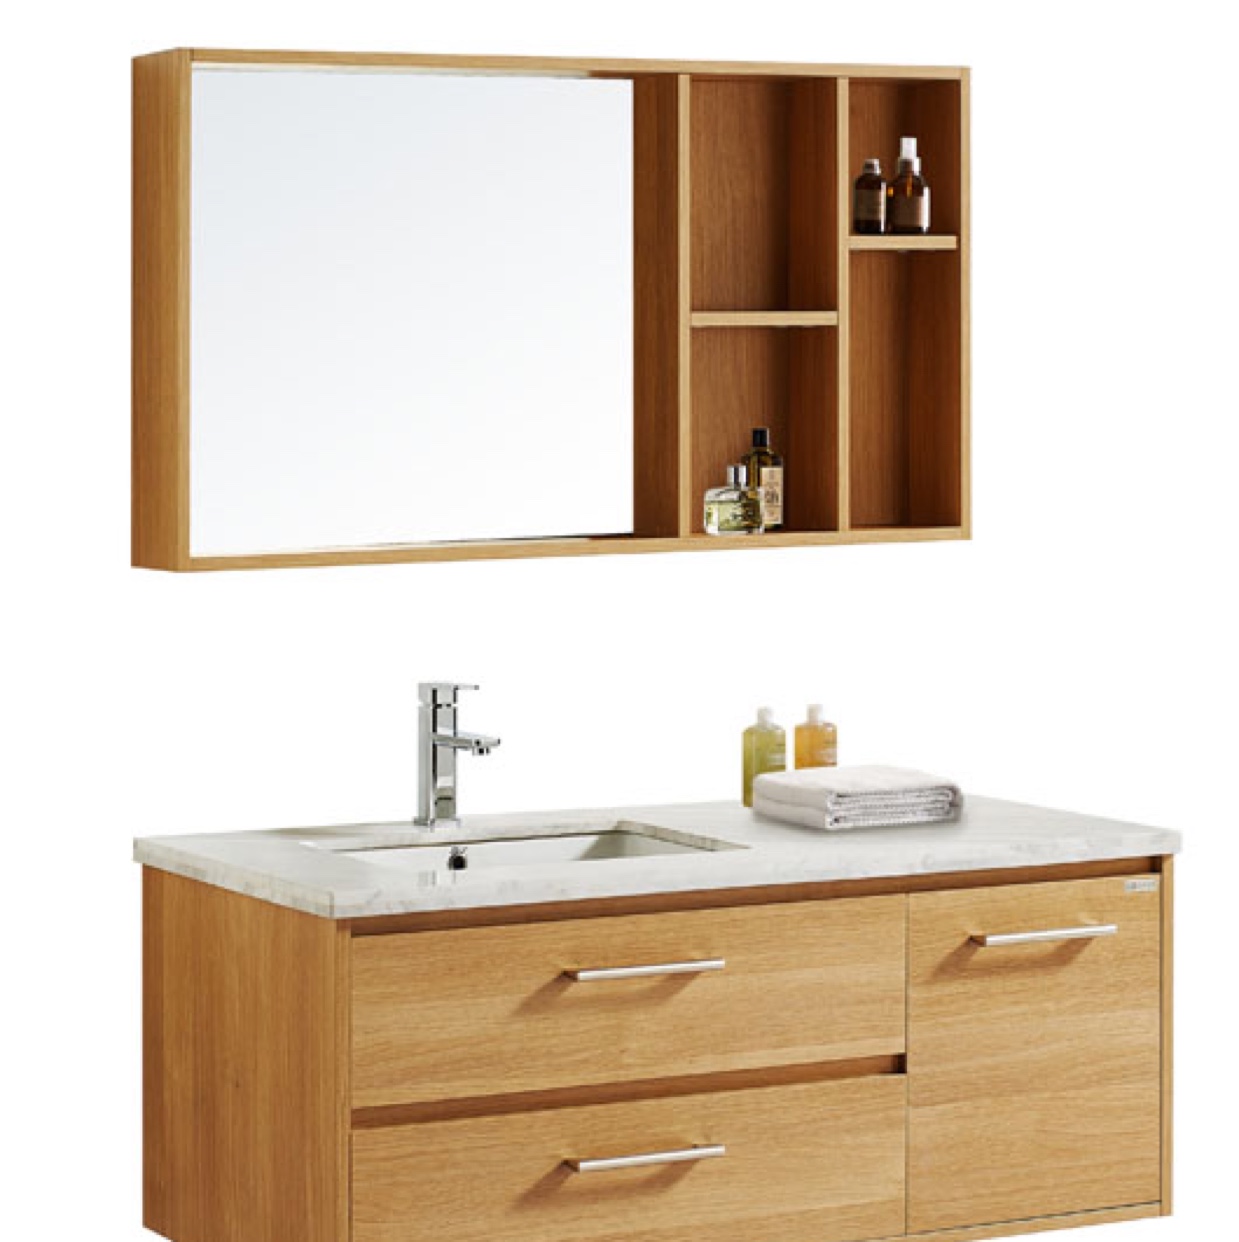 Y635-1200mm现代北欧风格浴室柜组合收纳洗漱台洗手洗脸盆可定制